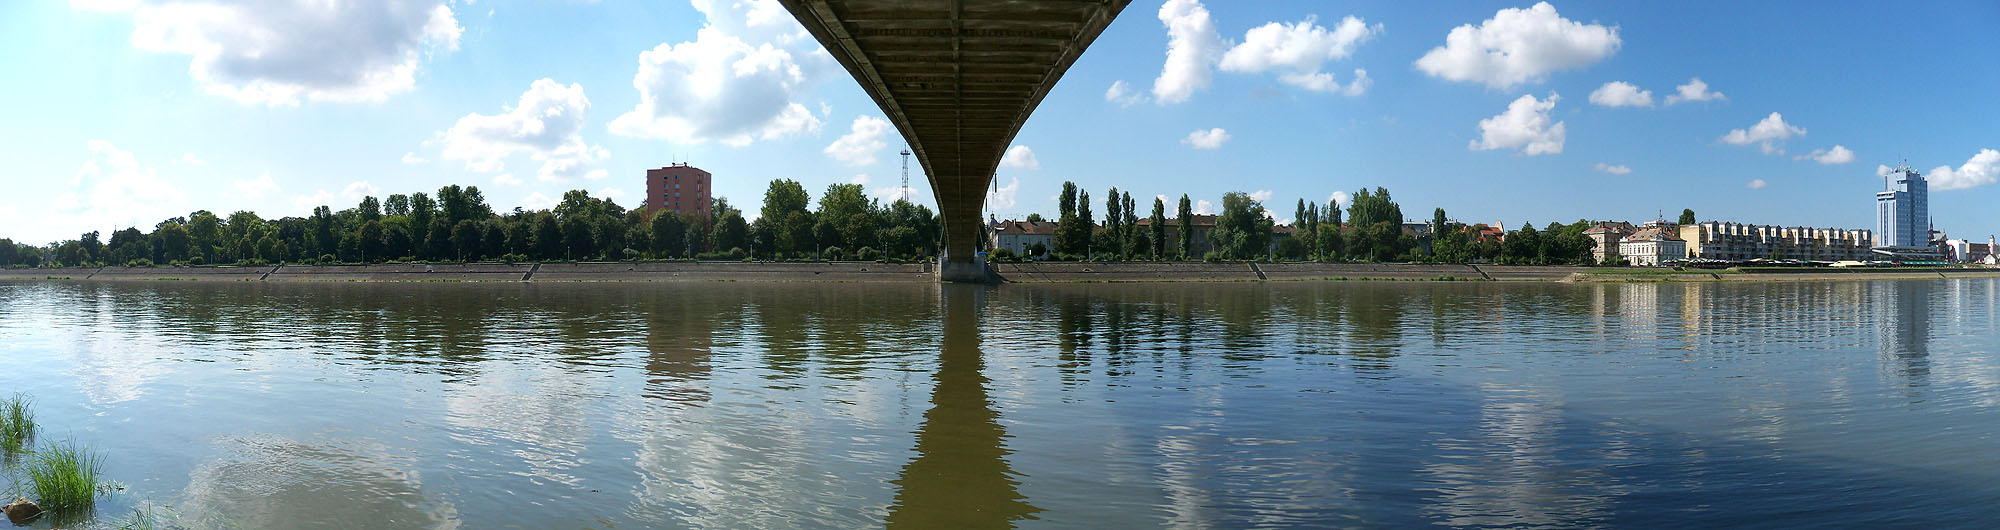 Panorama: Ispod mosta

Foto: [b]Milan Nadalin[/b]

Kljune rijei: ispod-mosta panorama